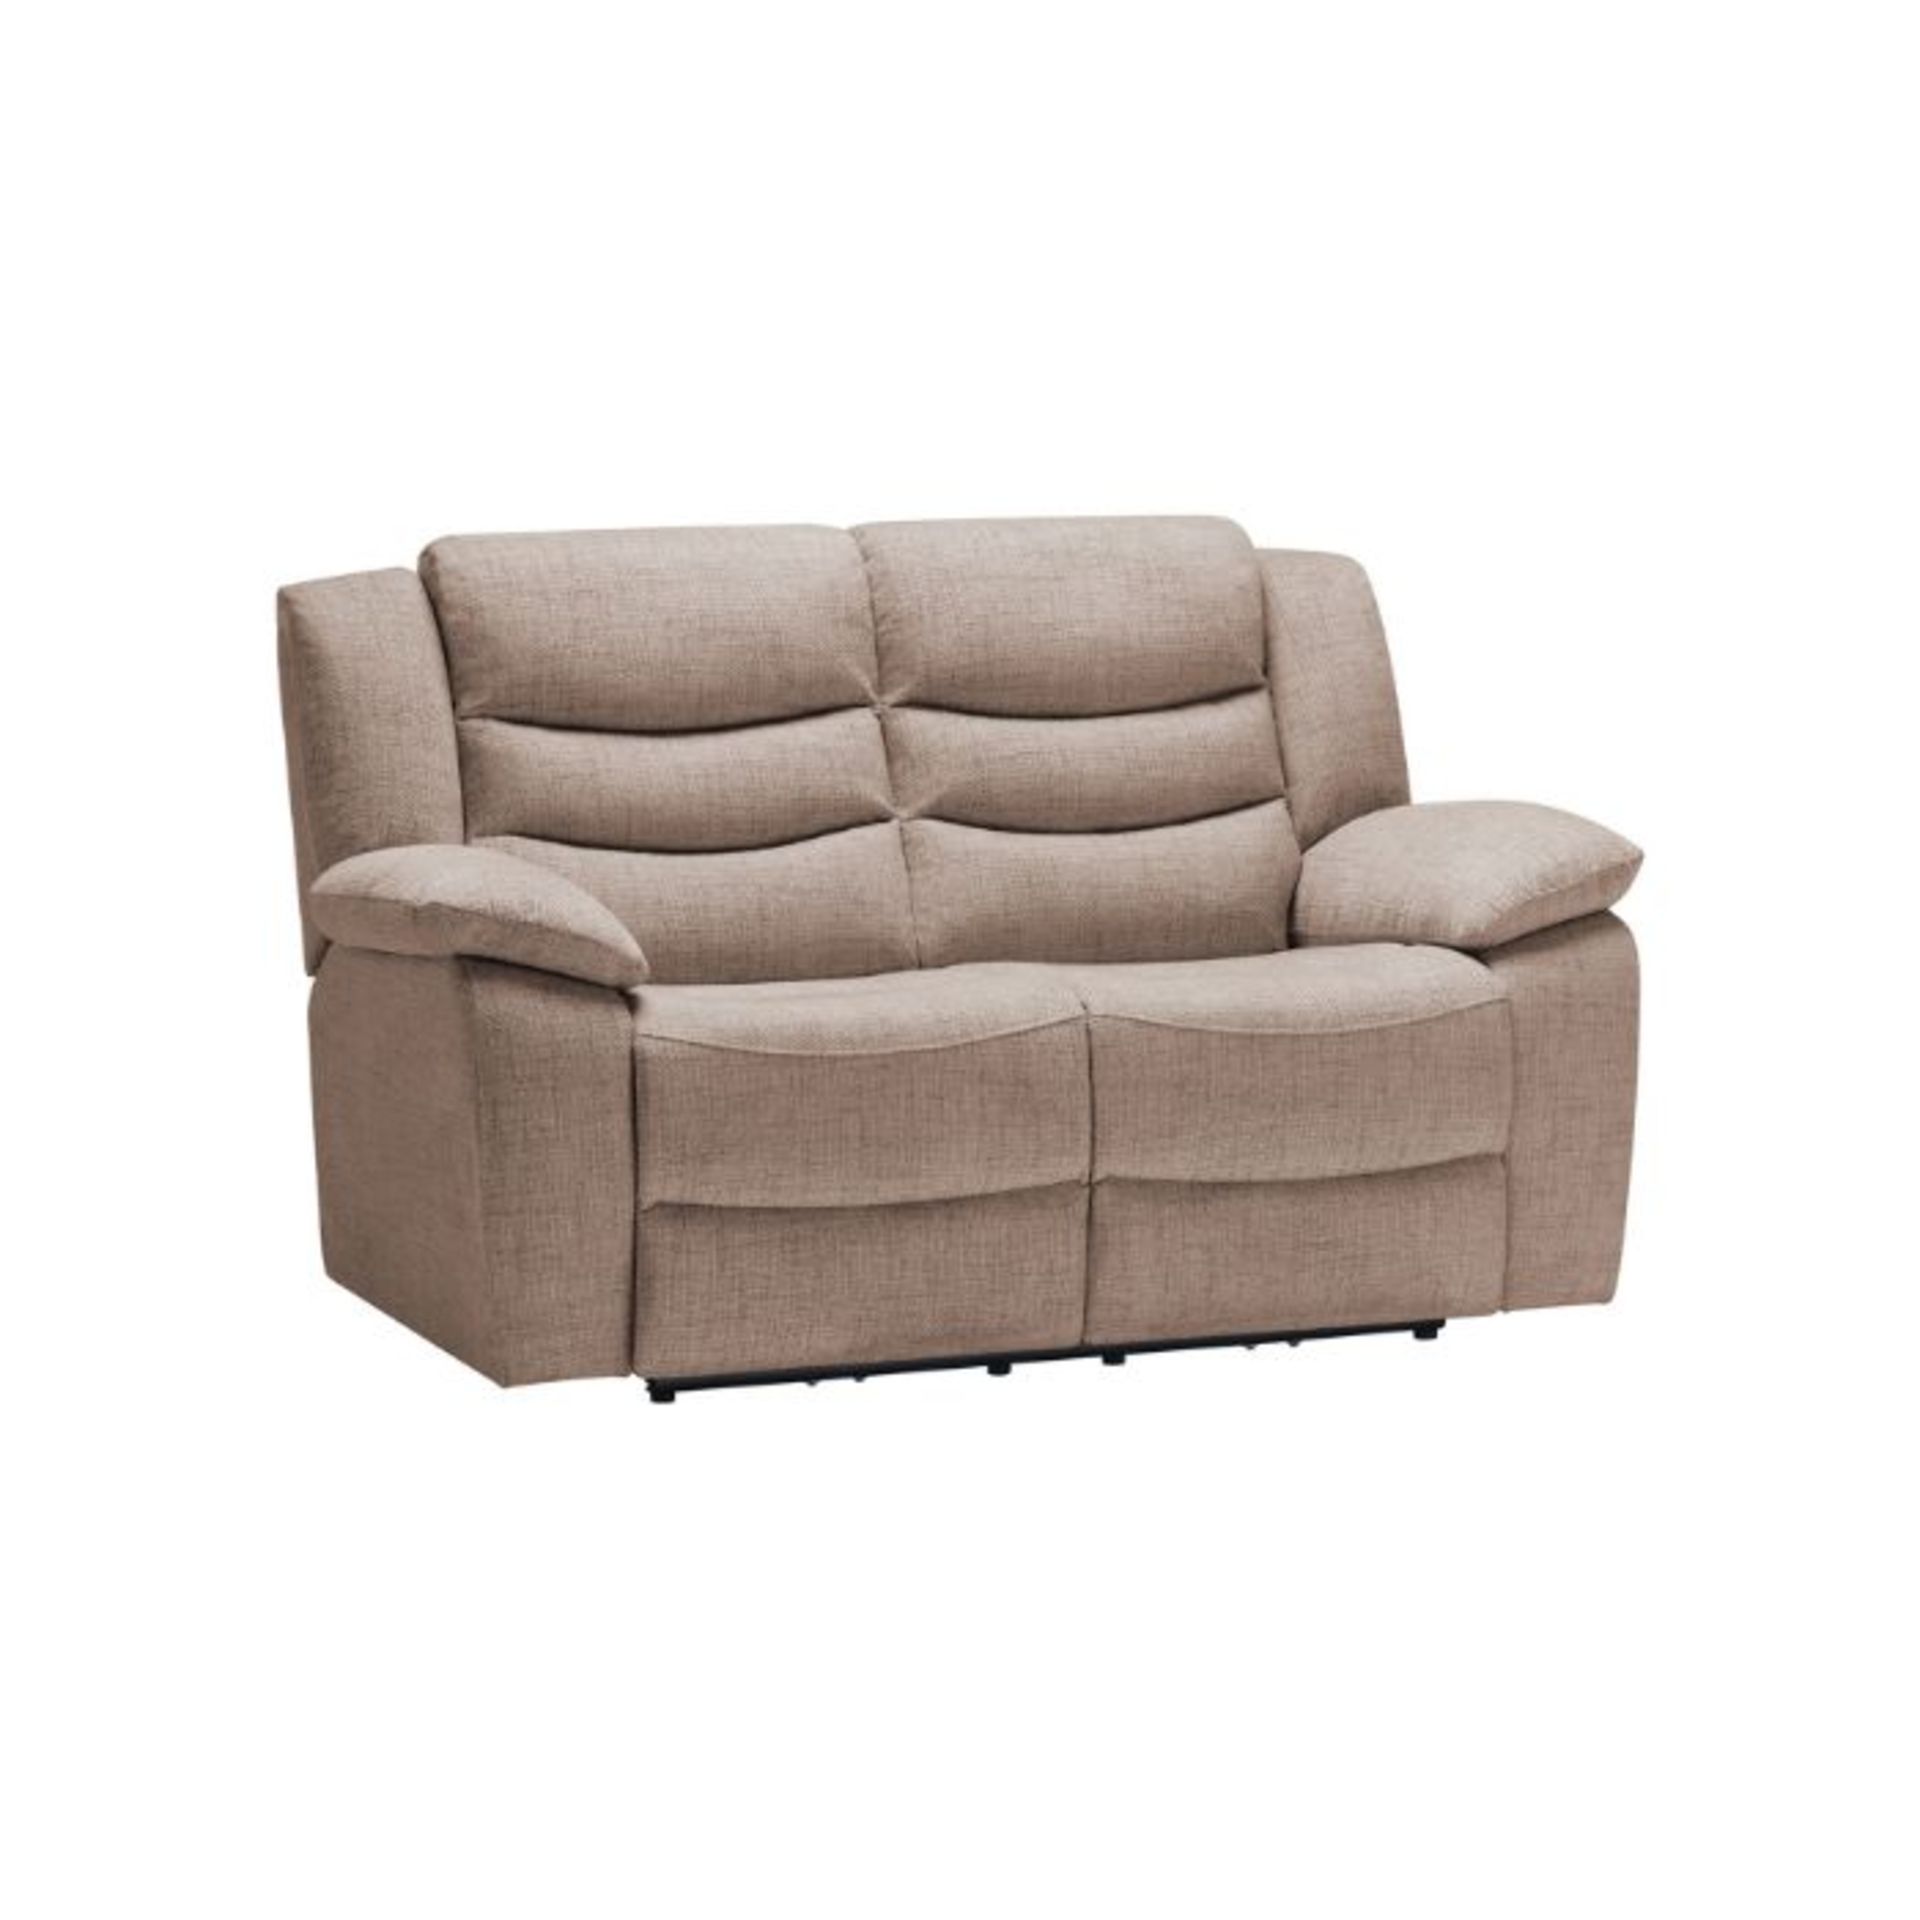 Oak Furnitureland Marlow 2 Seater Sofa In Dorset Beige Fabric RRP ?849.99 Our Marlow range is